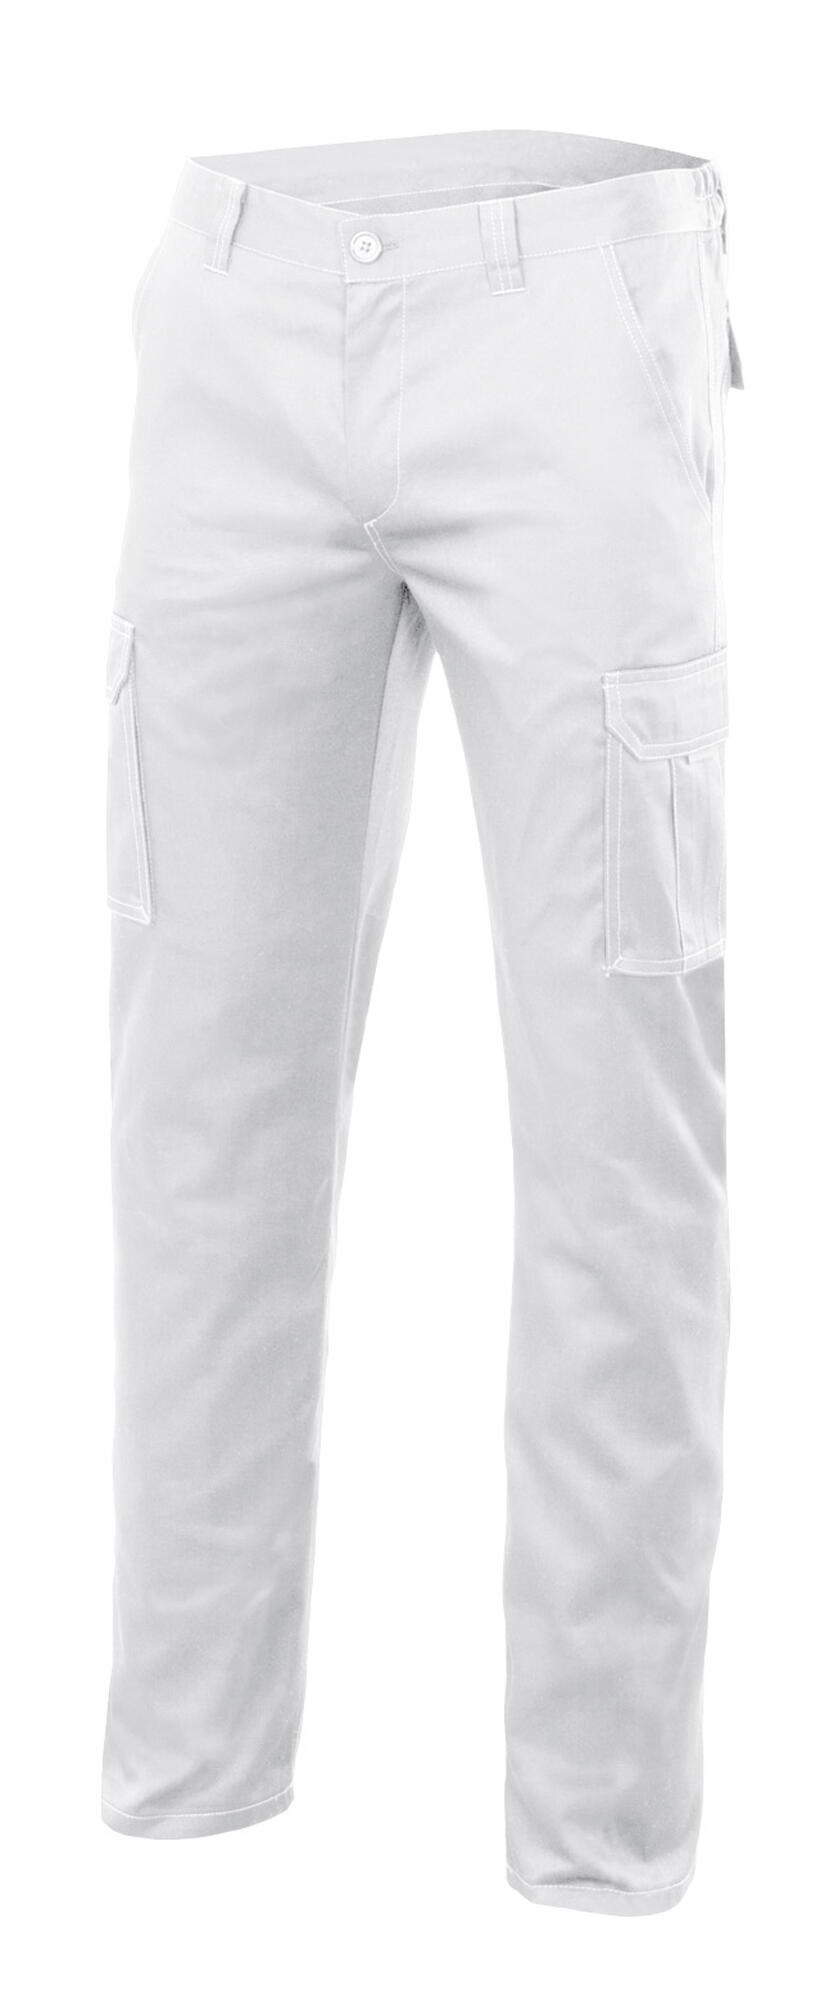 Pantalon de trabajo multibolsillo stretch blanco t58